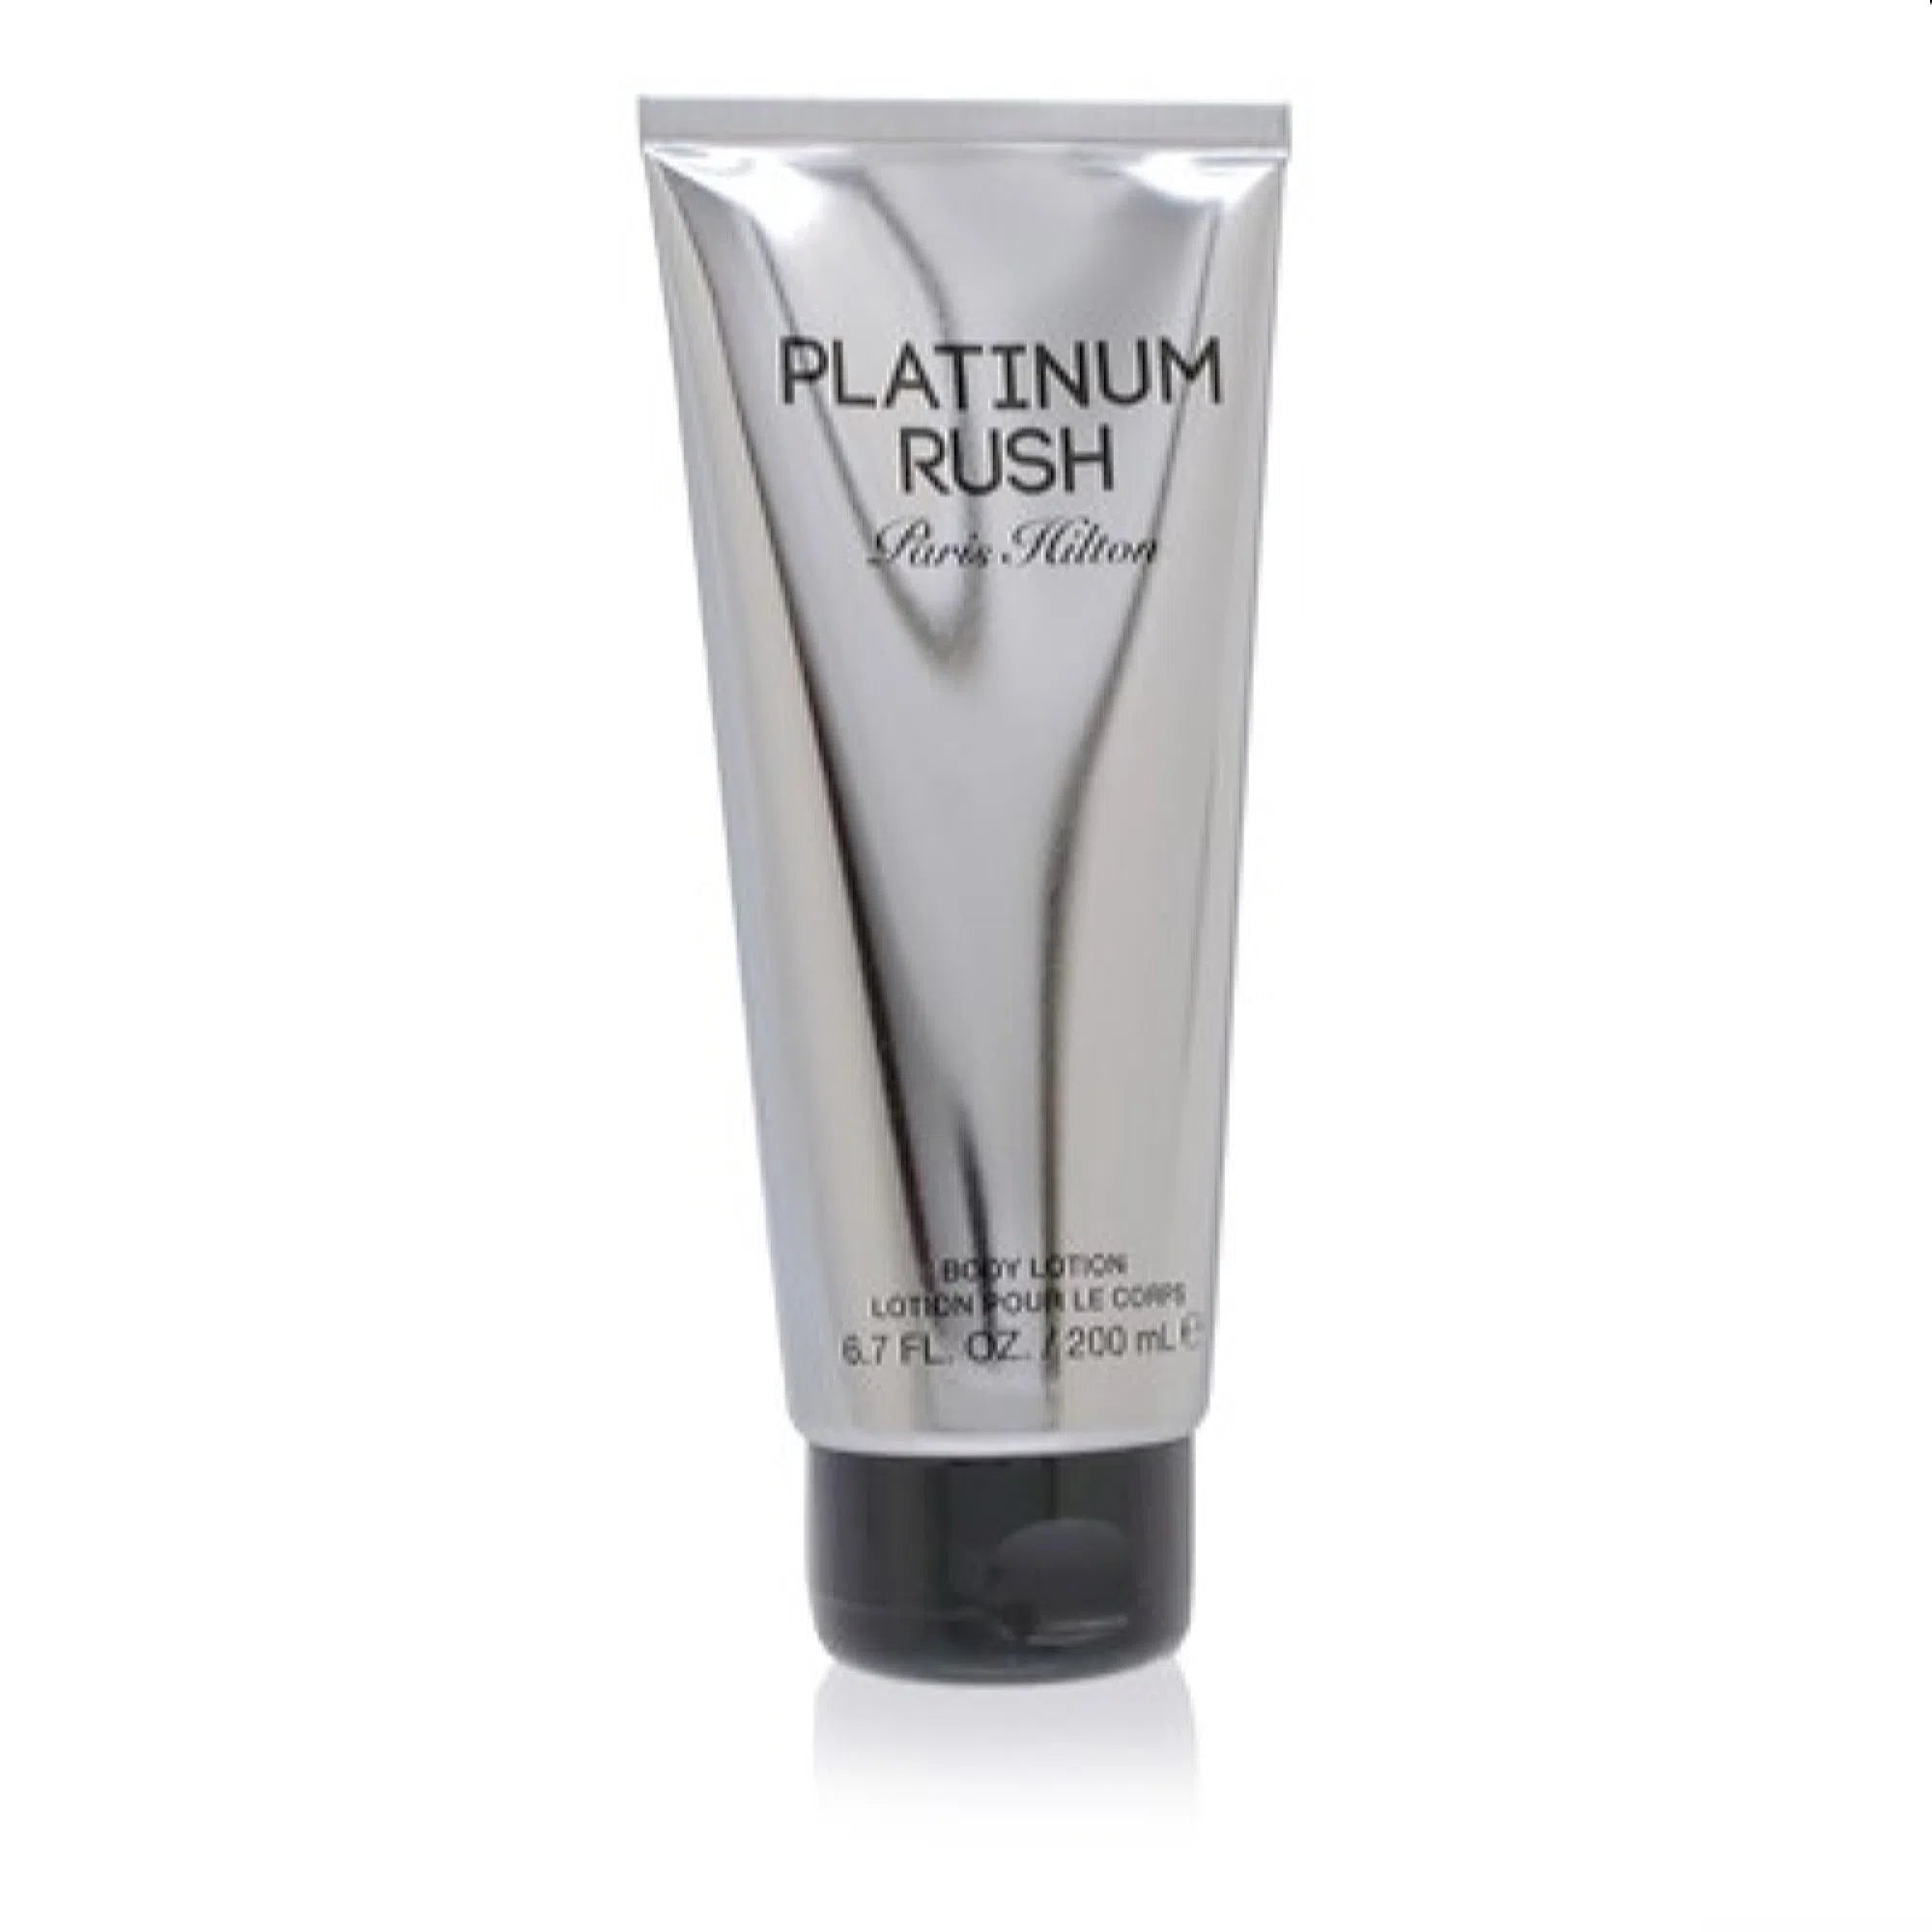 Crema Paris Hilton Platinum Rush Body lotion (W) / 200 ml - 608940580622- Prive Perfumes Honduras